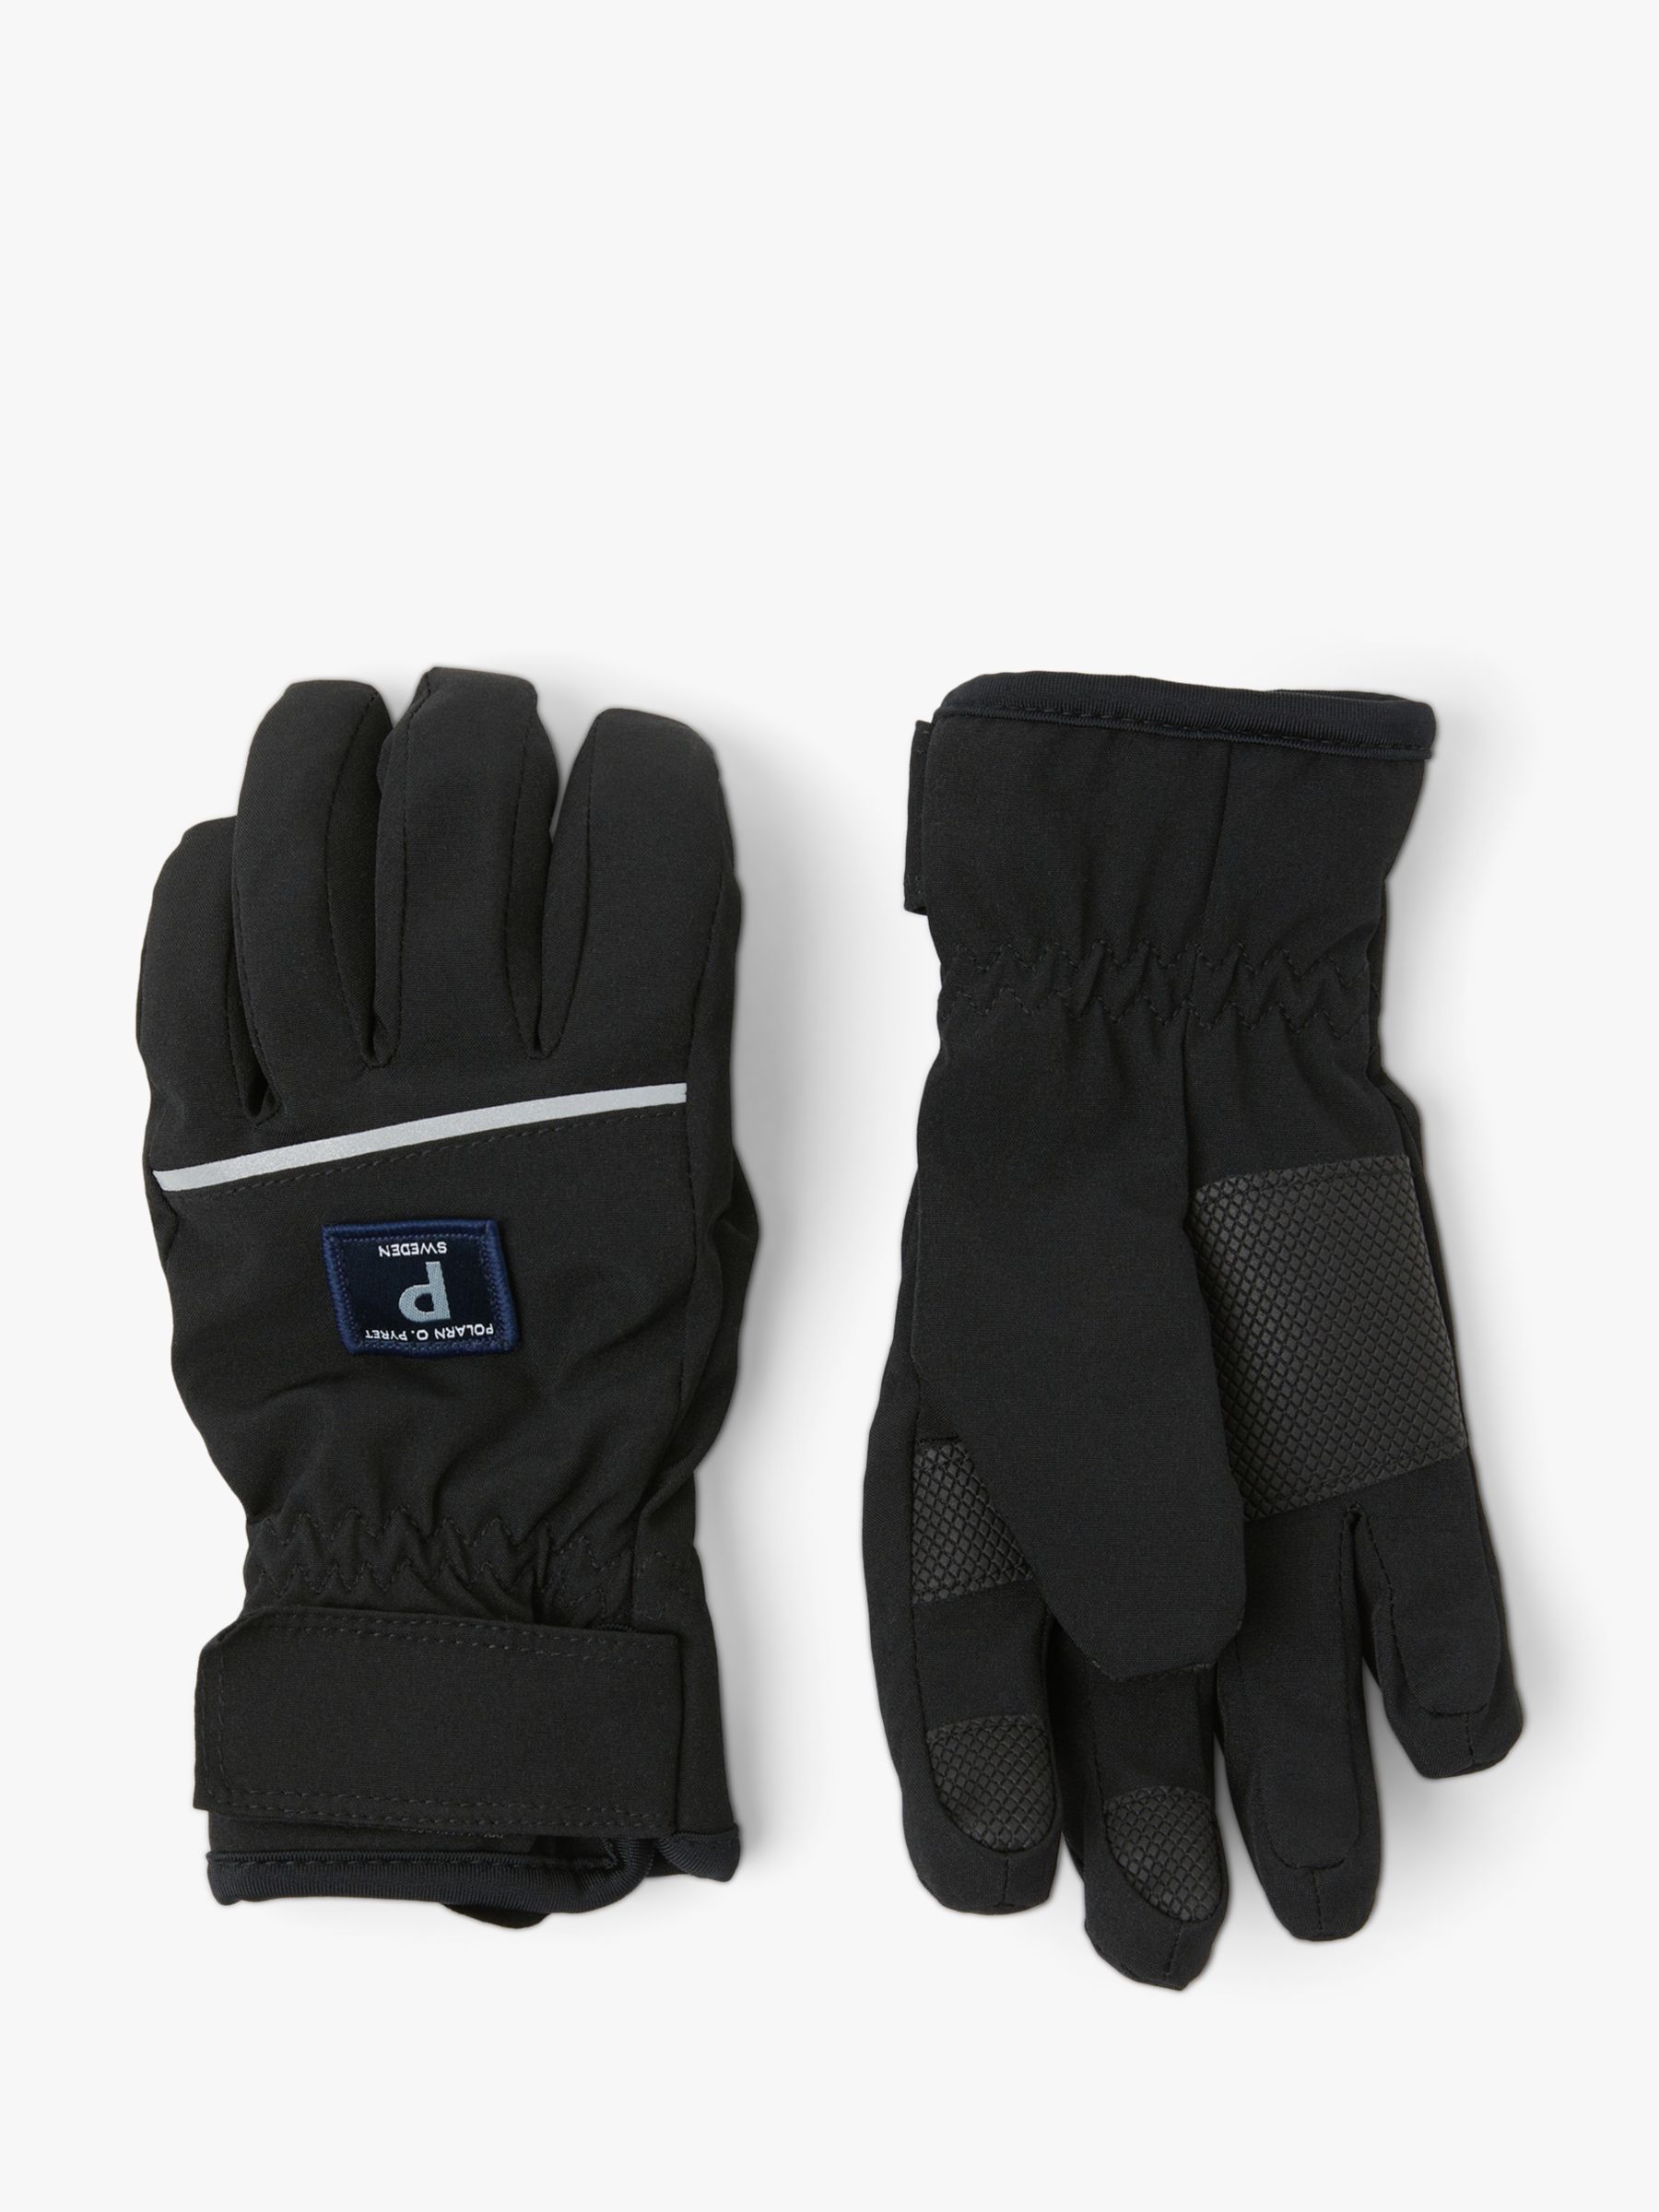 Polarn O. Pyret Kids' Soft Gloves, Black, 6-9 years